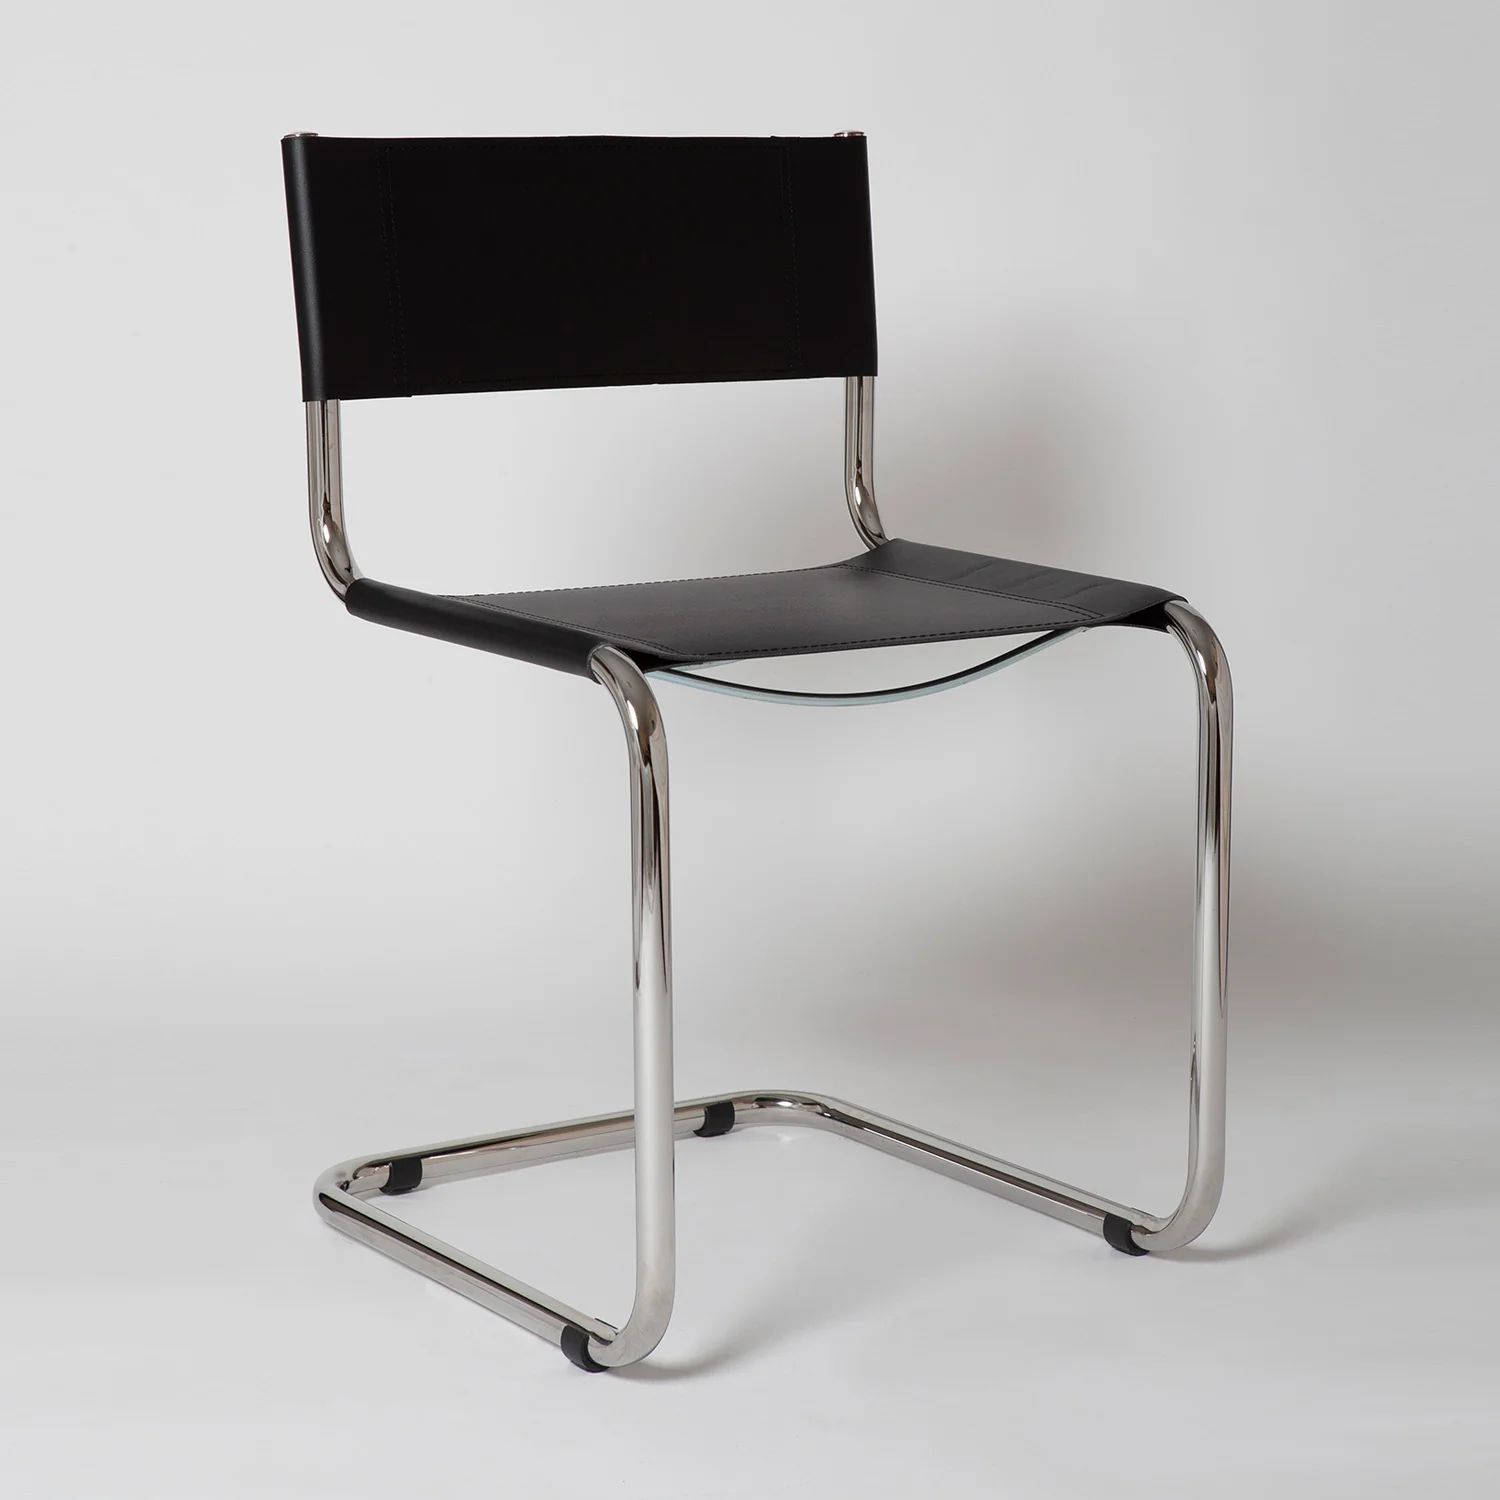 301 Sandalye (301 Chair): Mart Stam